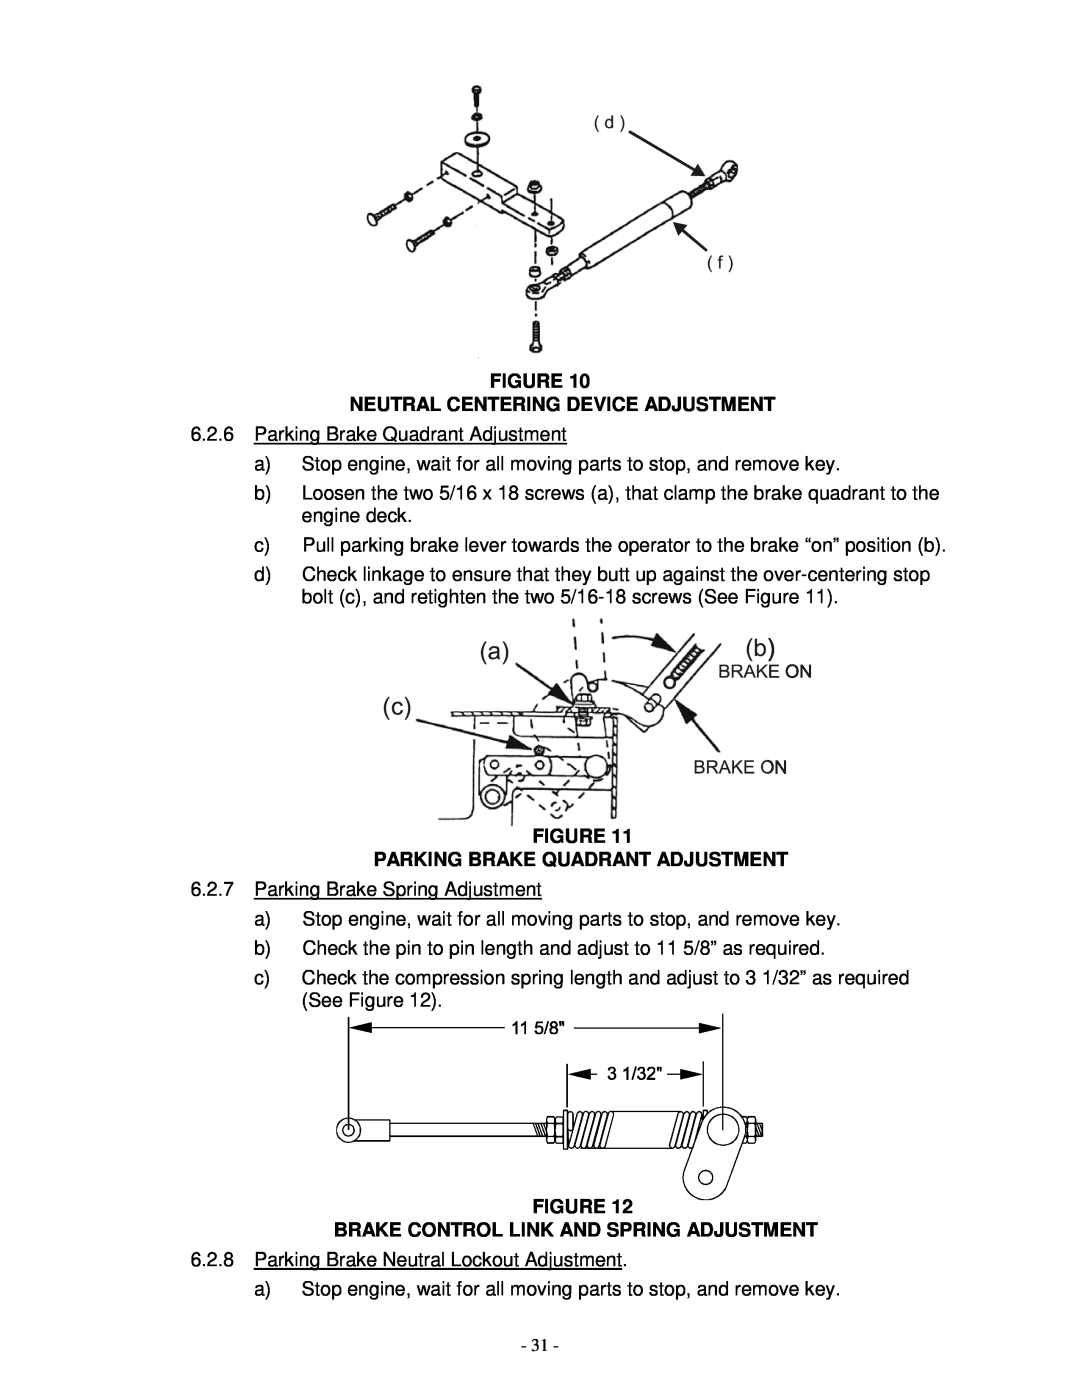 Exmark TR23KC manual Figure Neutral Centering Device Adjustment, Figure Parking Brake Quadrant Adjustment 